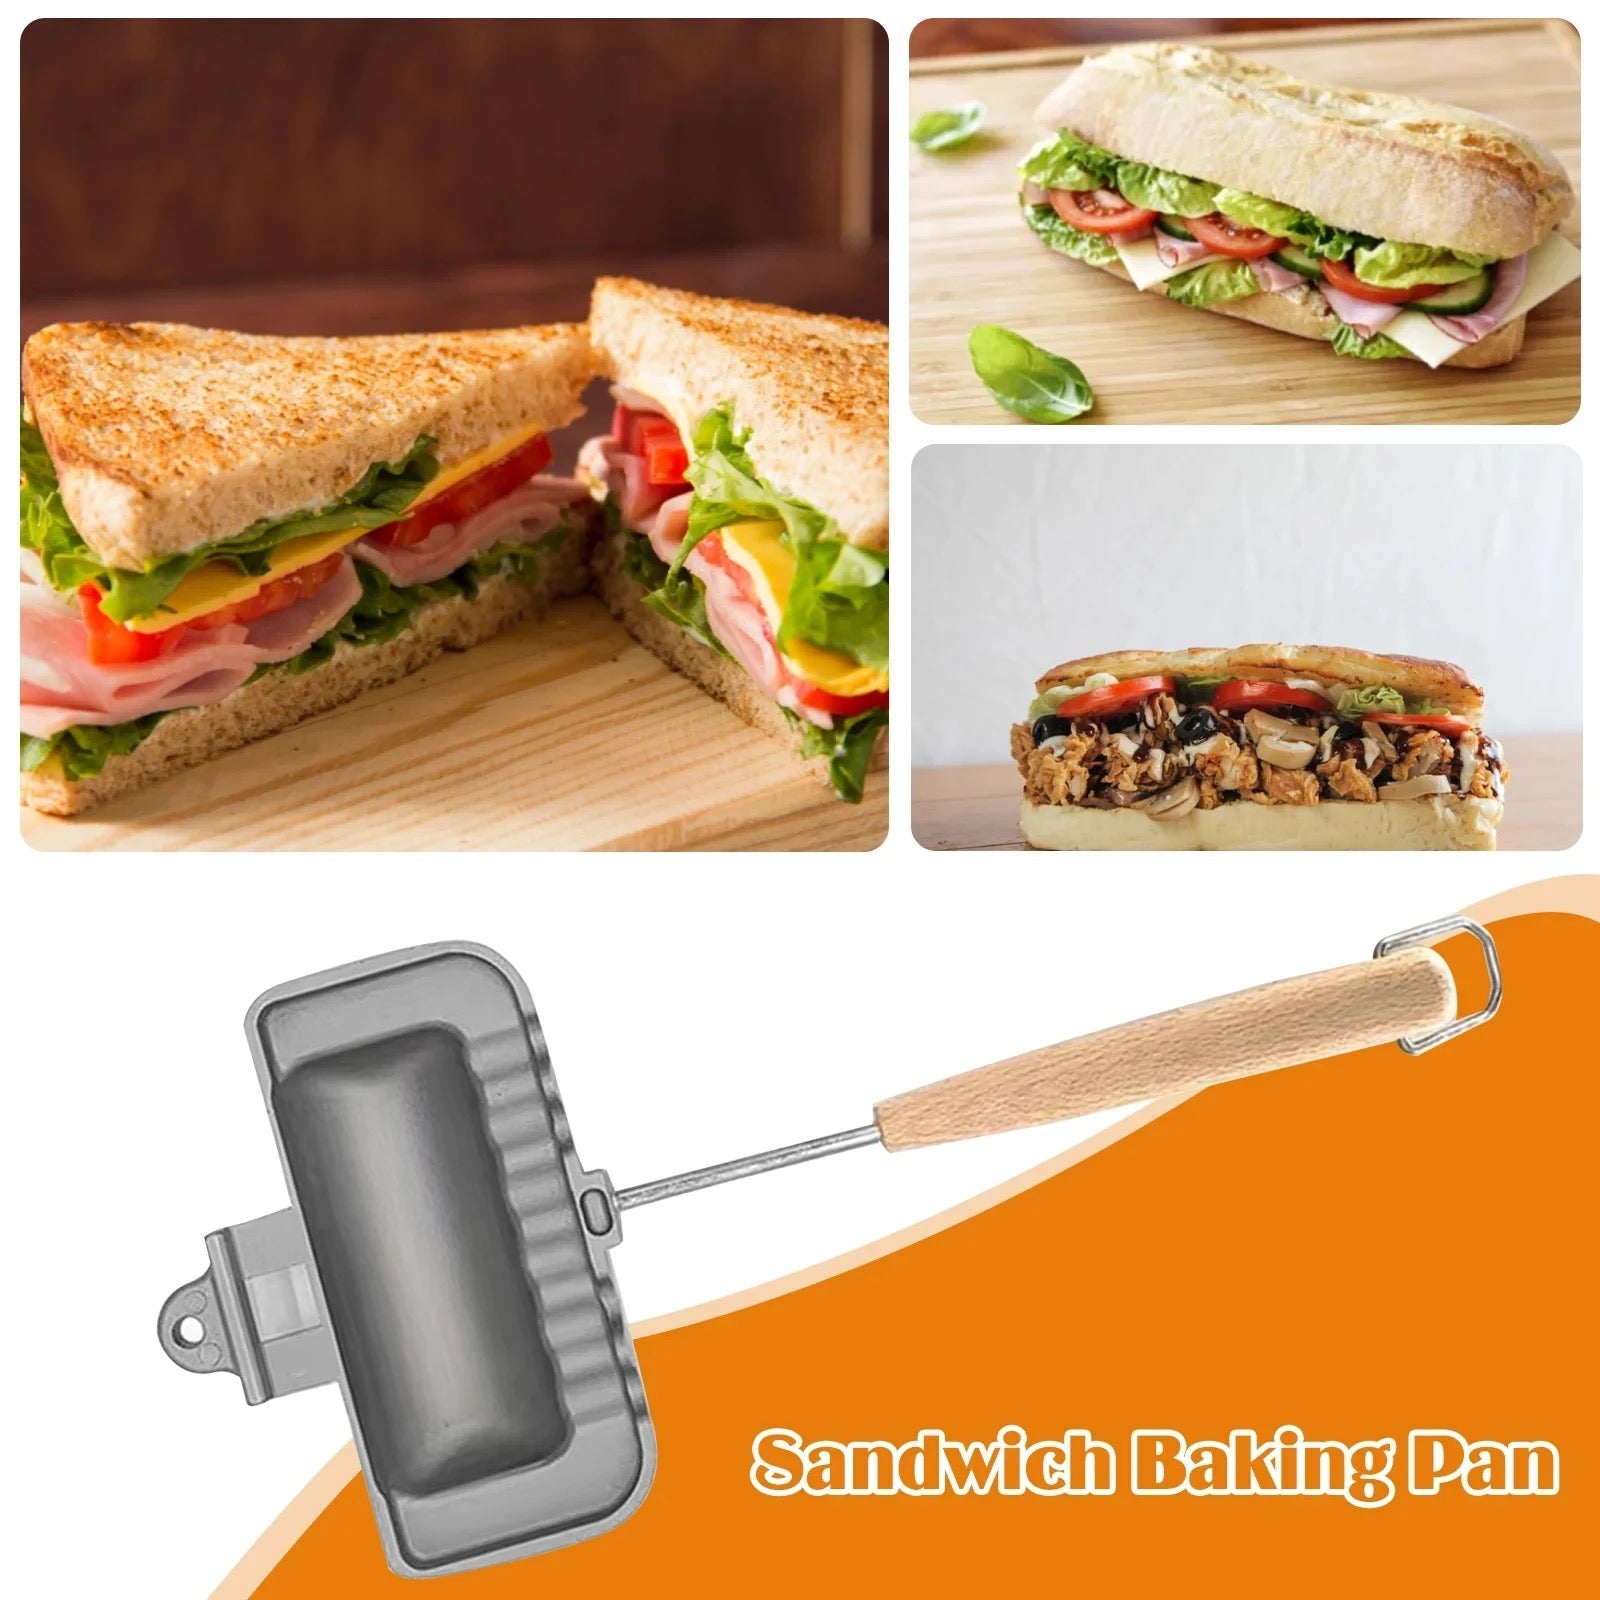 Double-Sided Breakfast Sandwich Maker and 3 different Sandwiches prepared using Double-Sided Breakfast Sandwich Maker